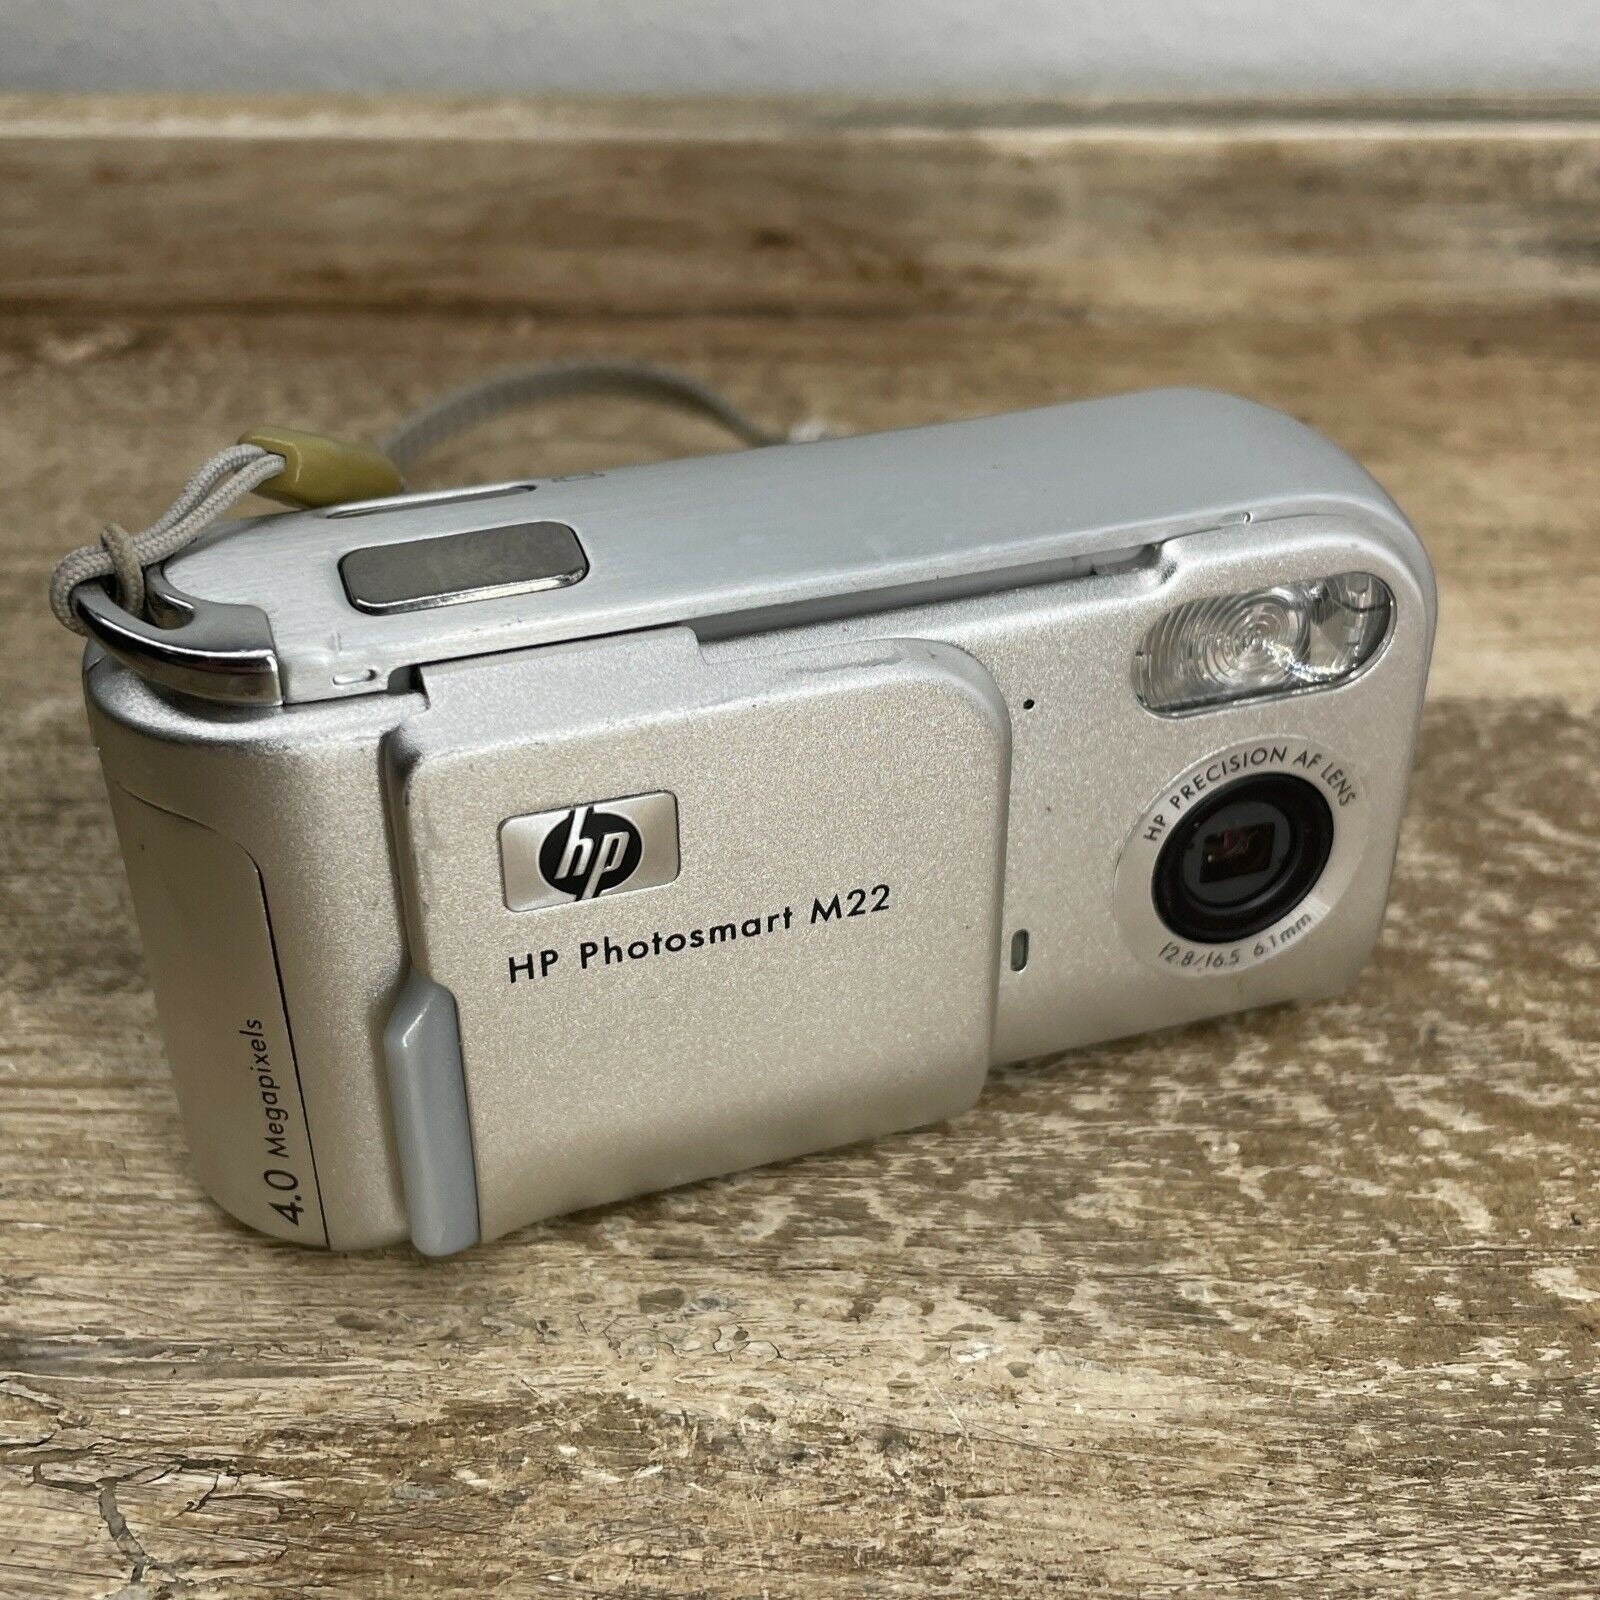 HP PhotoSmart M22 Digital Camera - Silver